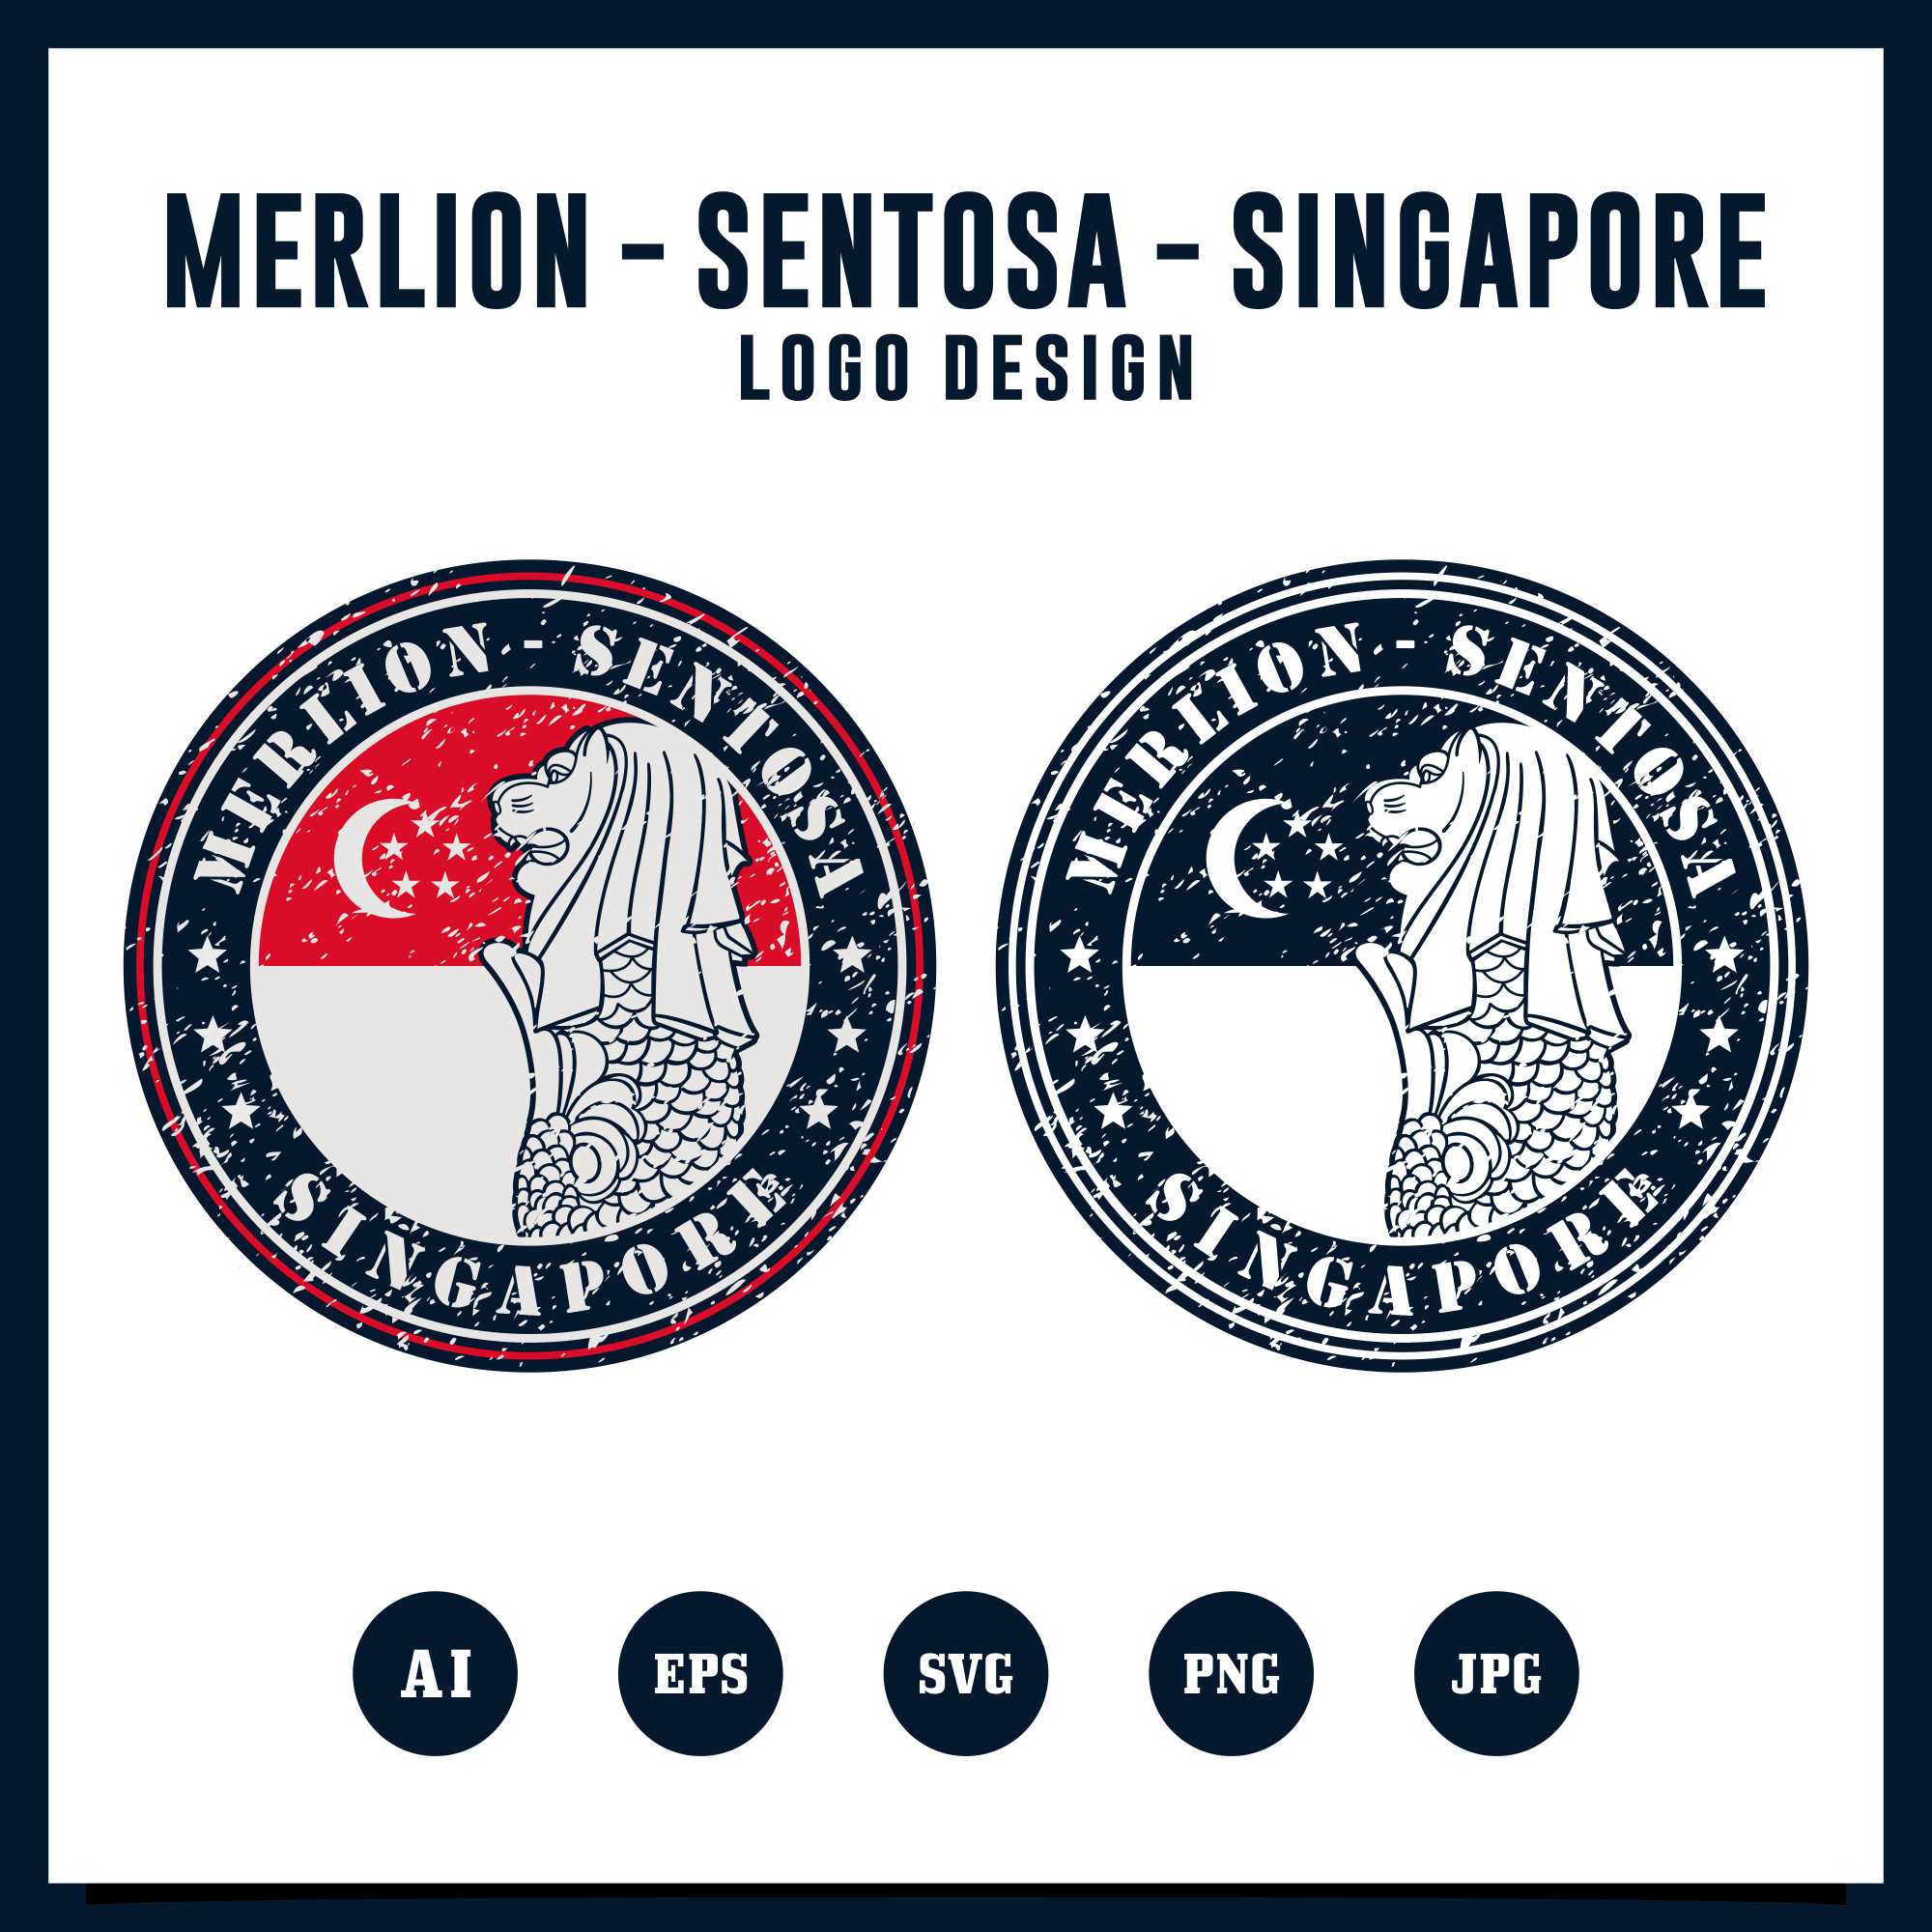 Merlion sentosa singapore logo design collection - $4 cover image.